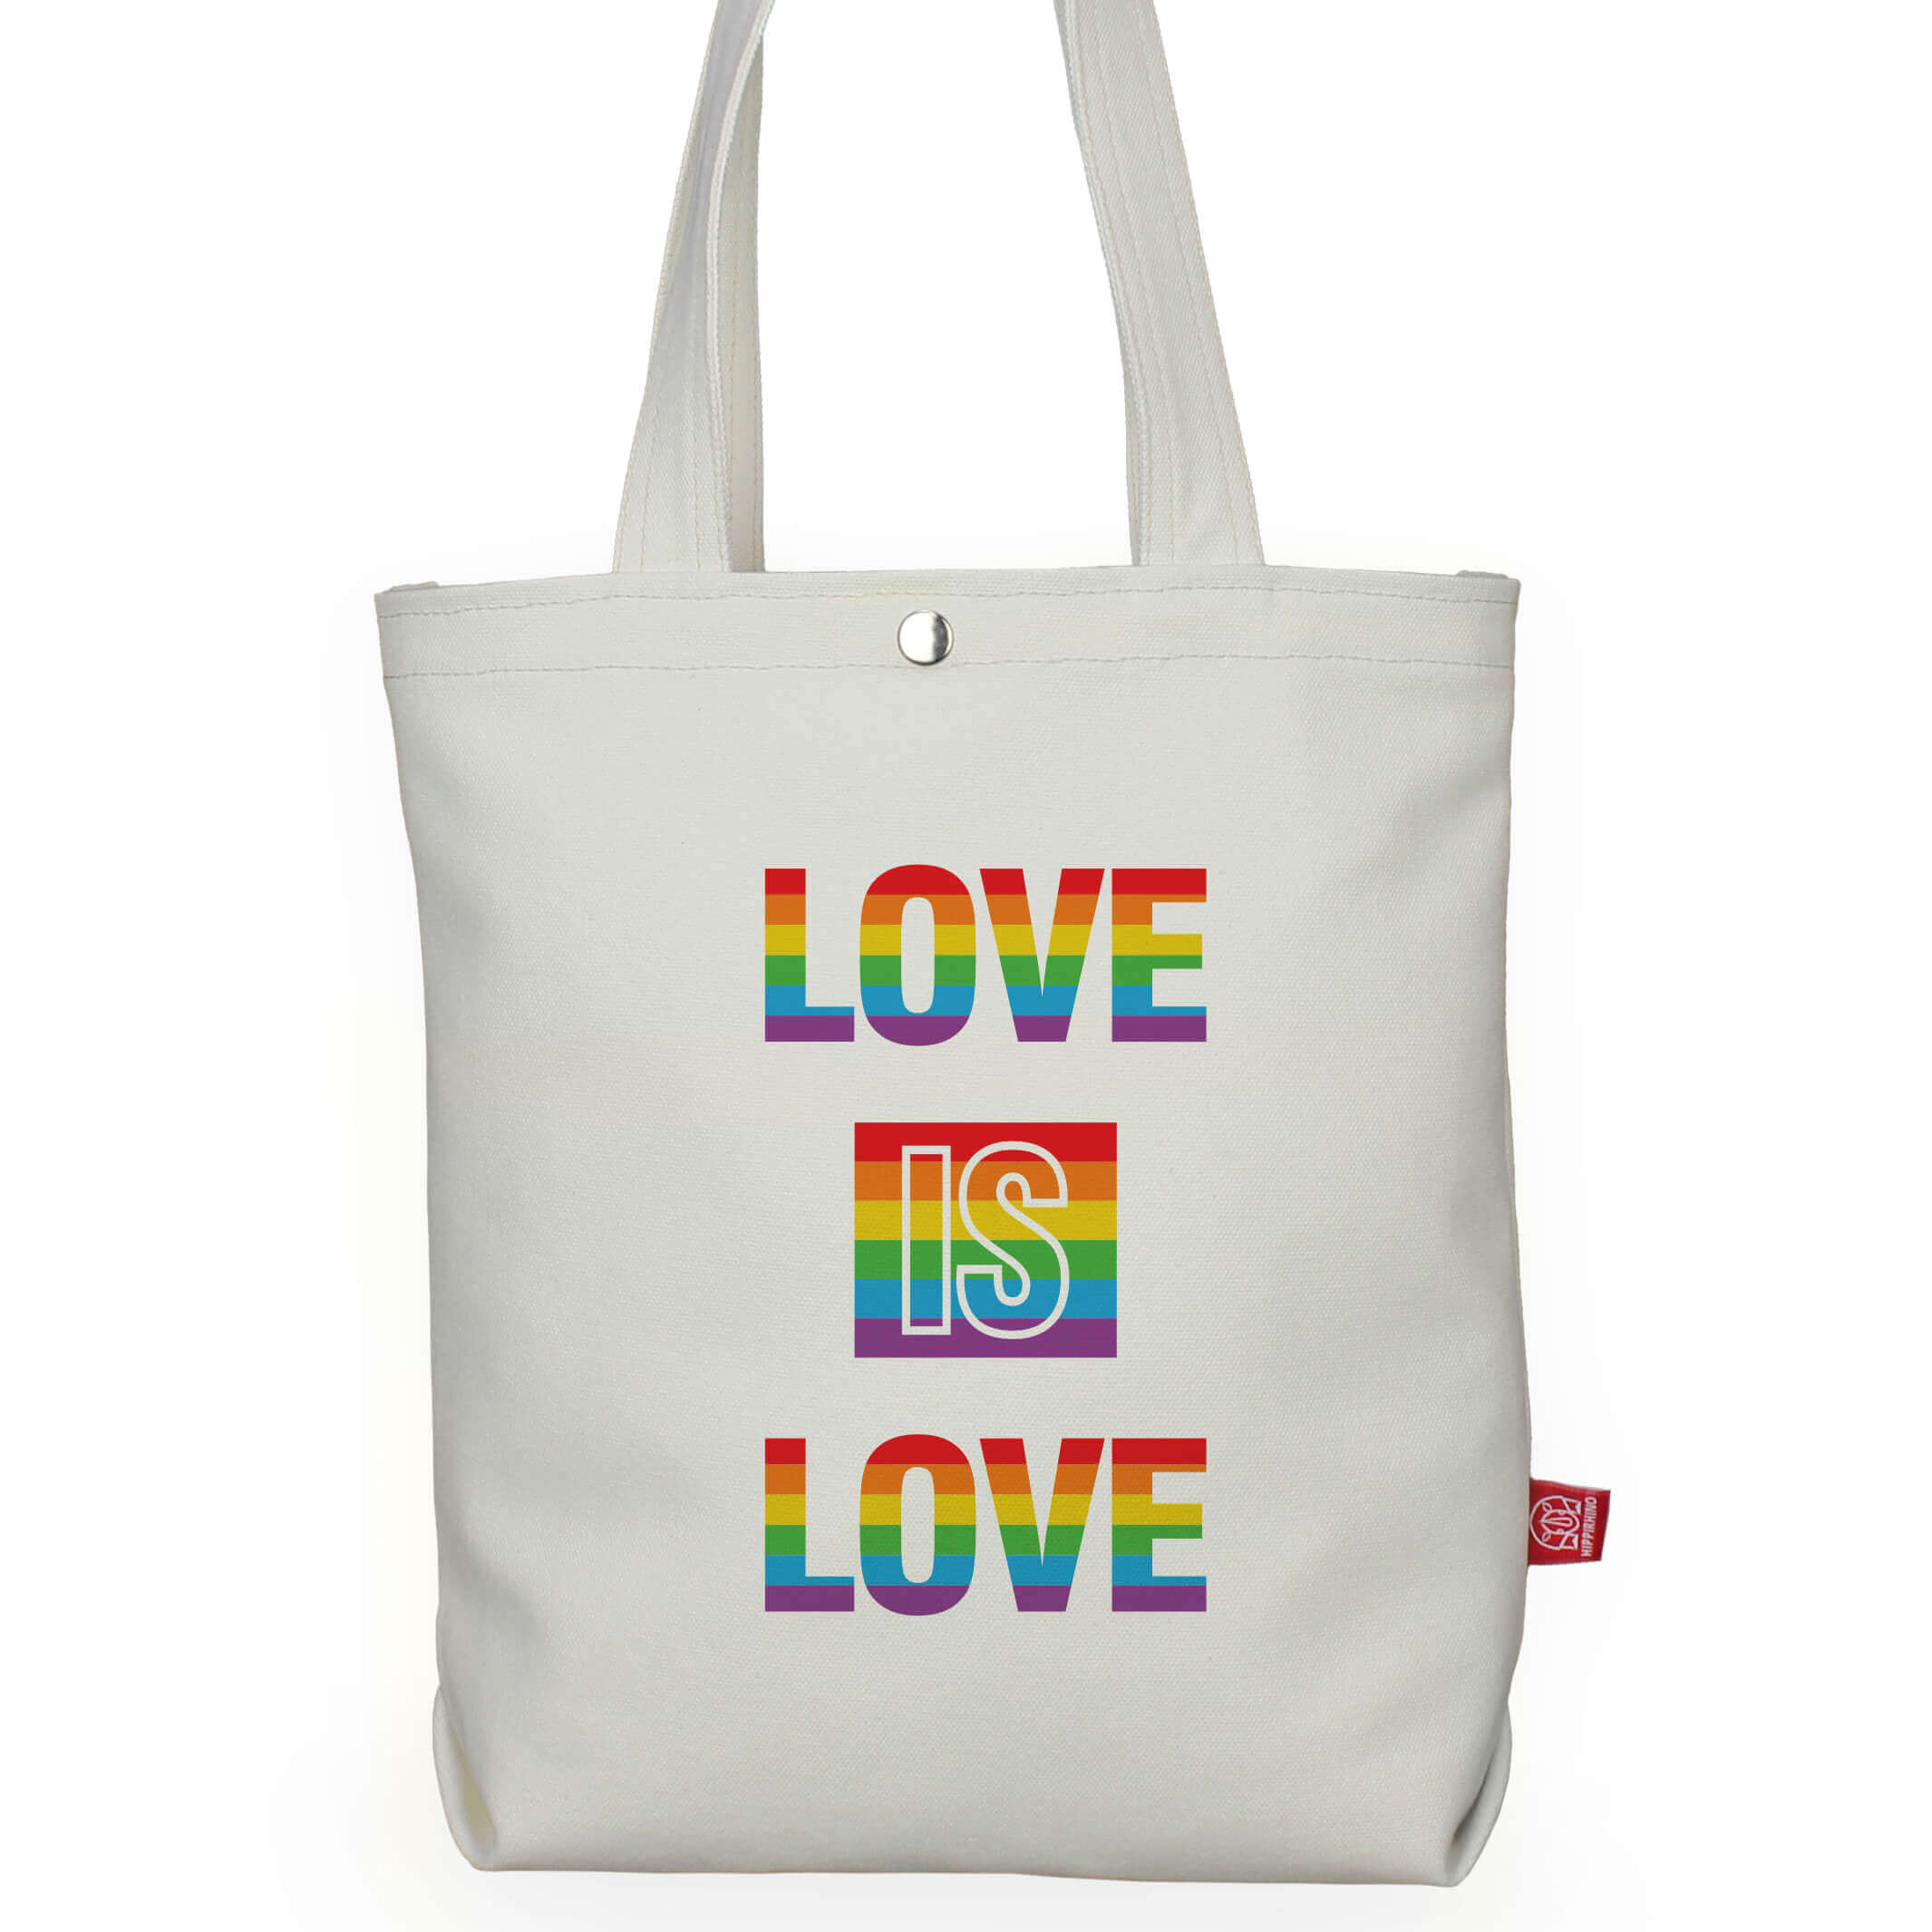 2x Ikea Reusable Tote Bag Small Shopping Rainbow LGBTQ Gay Pride